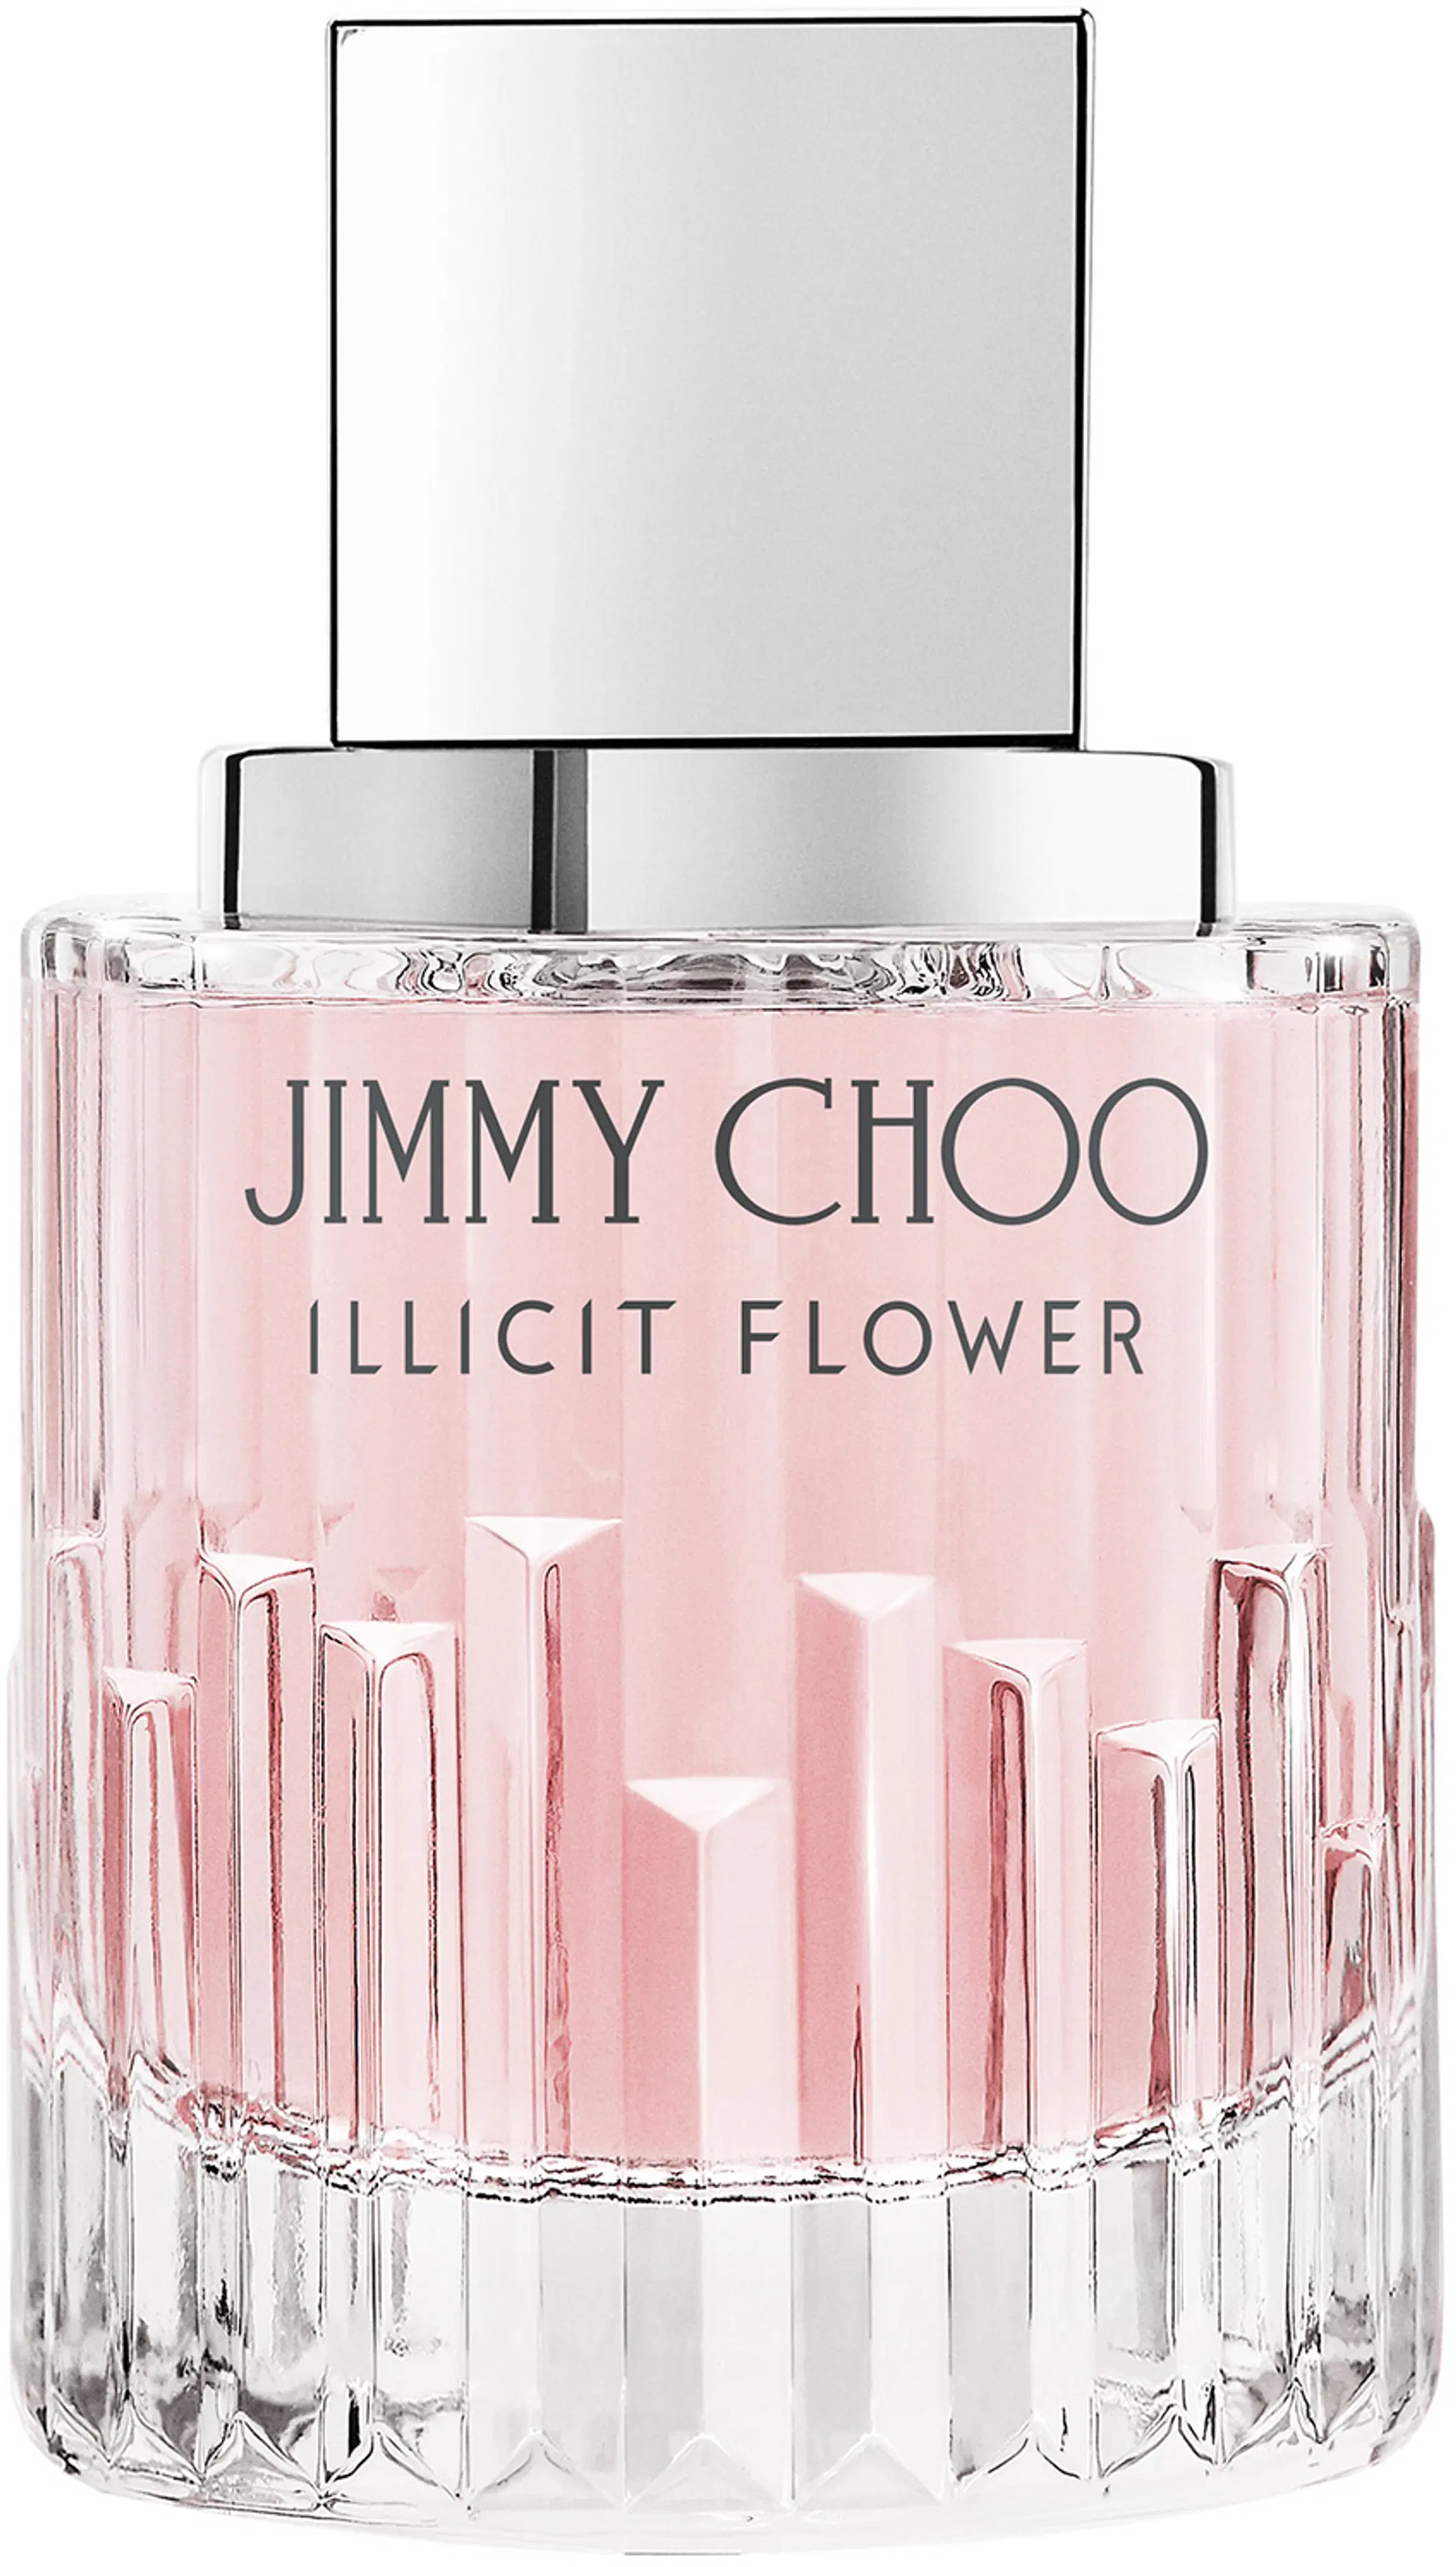 Jimmy Choo Illicit Flower EdT tuoksu 40 ml